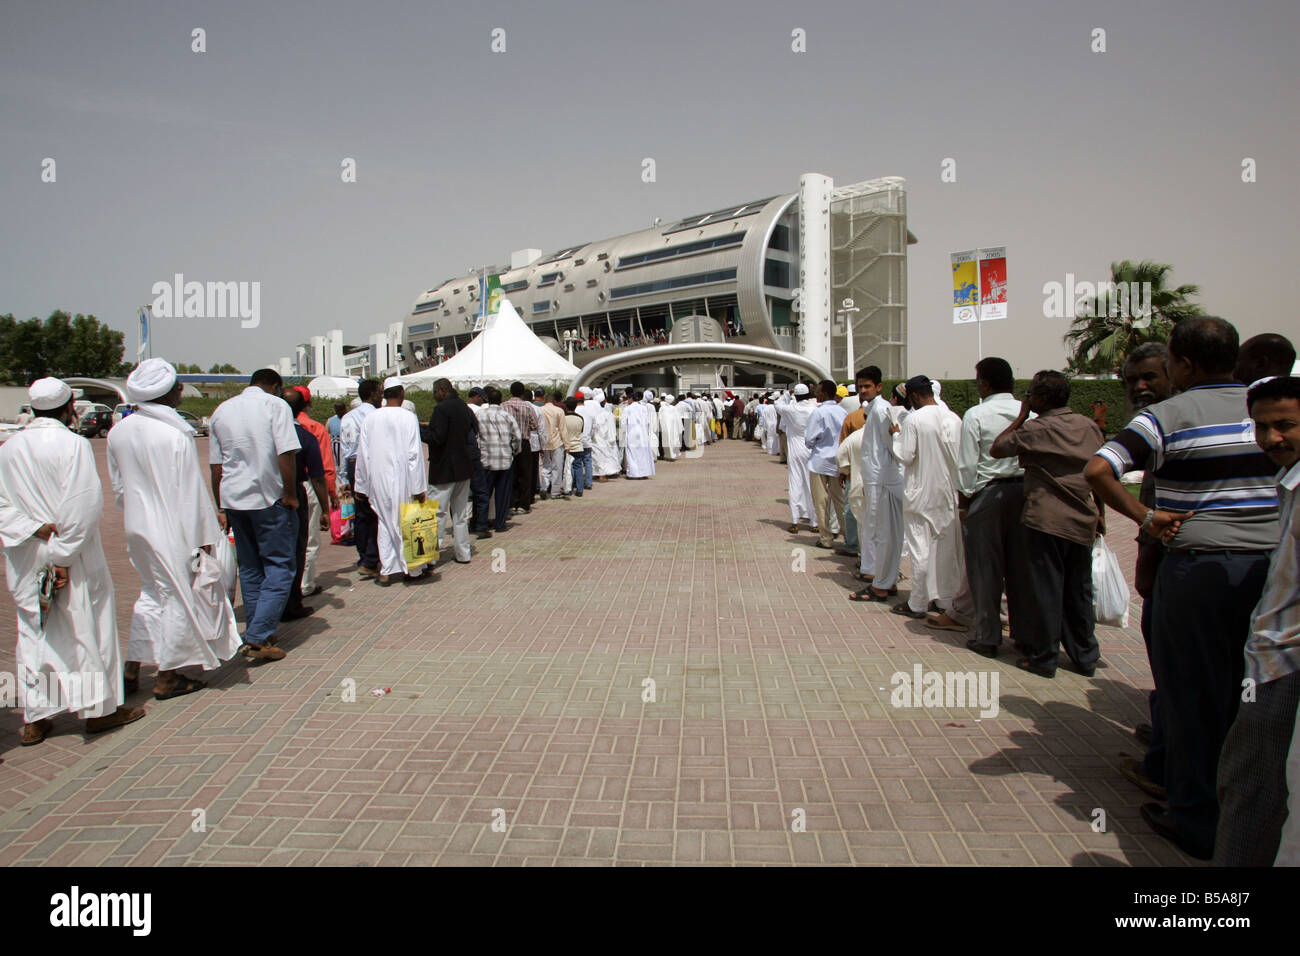 Arab men waiting in queues to the Nad Al Sheba horse race course, Dubai, United Arab Emirates Stock Photo